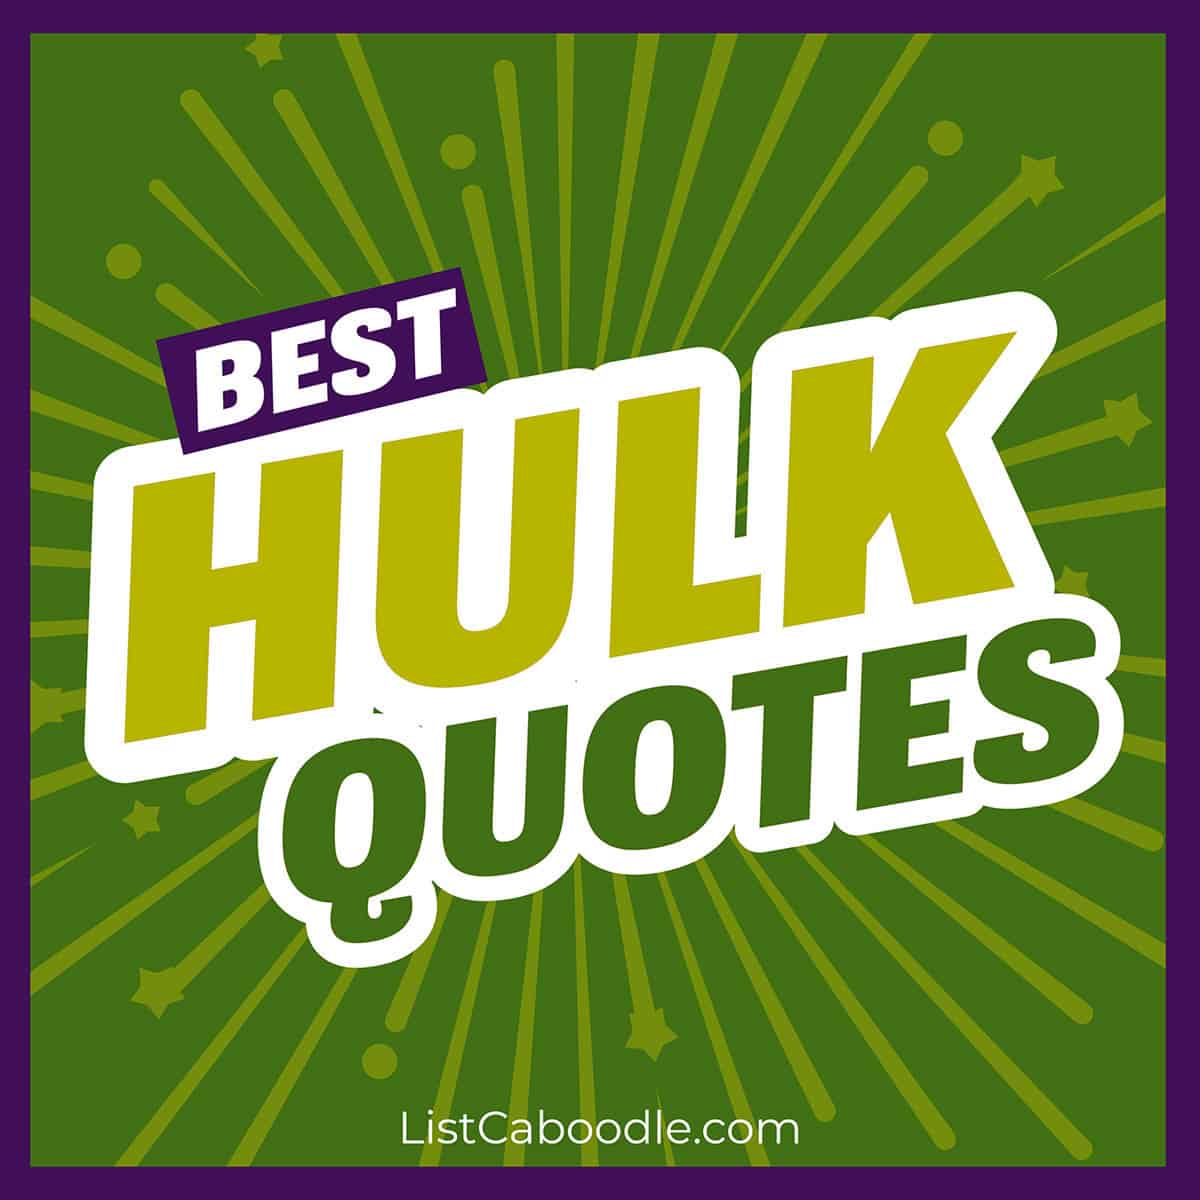 Good Hulk Quotes and Sayings